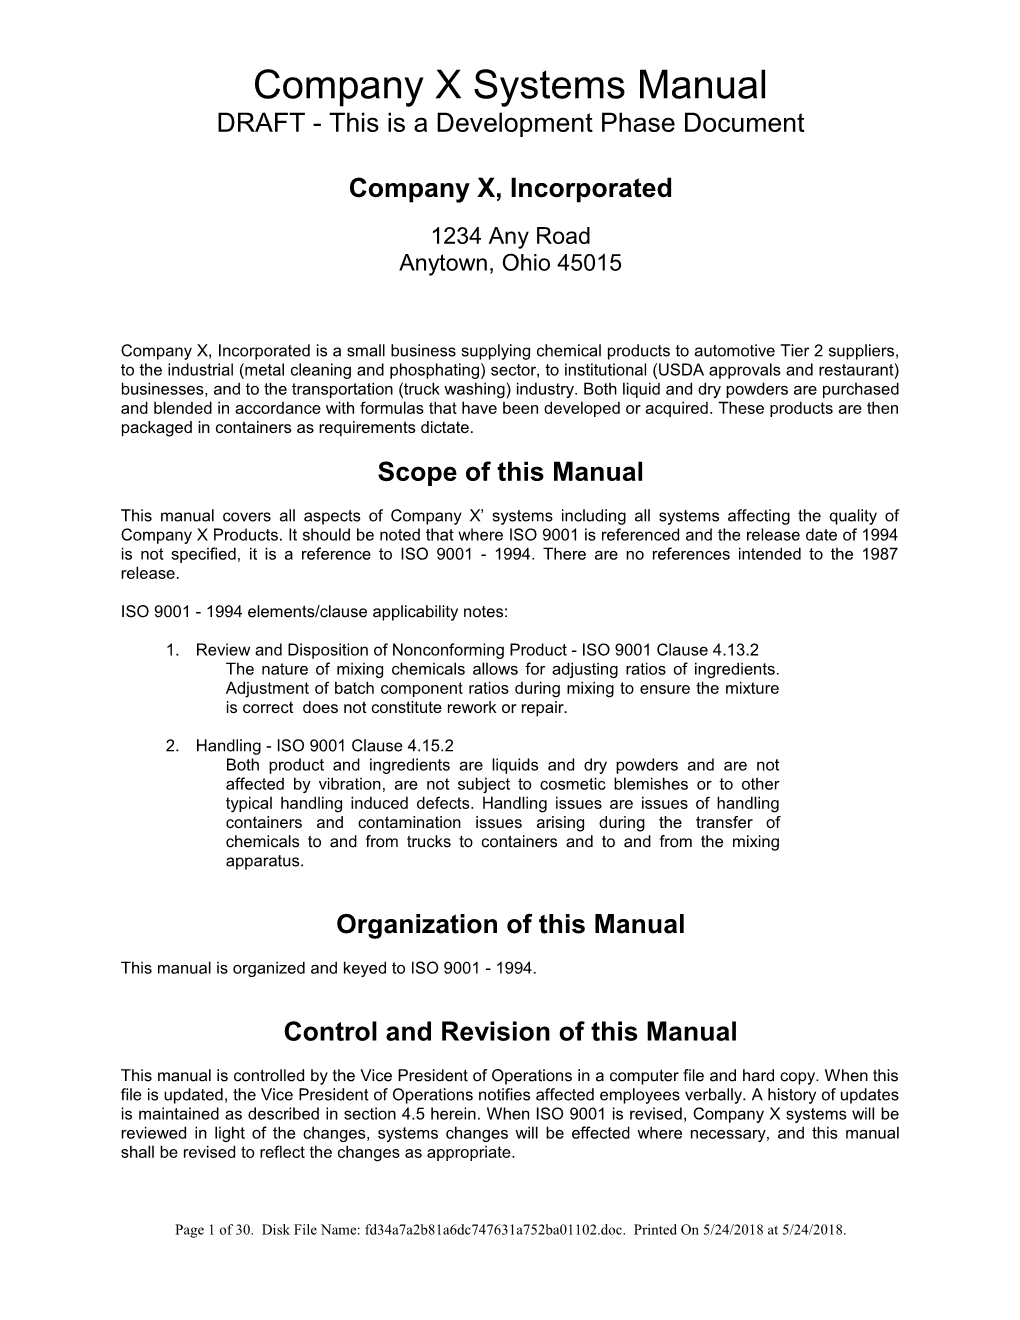 COMPANY Quality Systems Manual